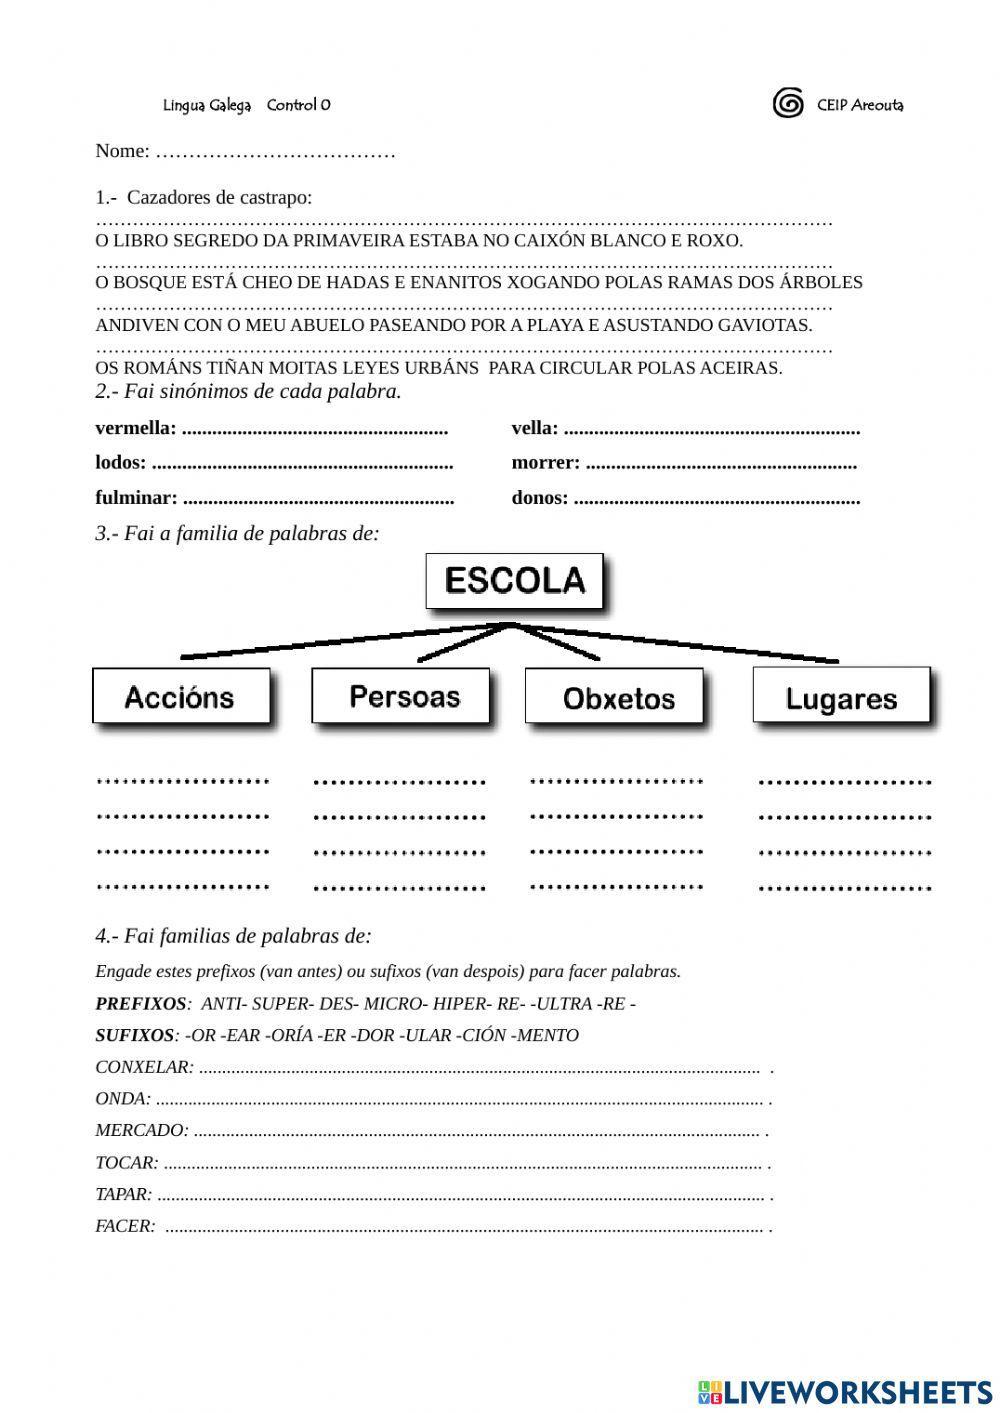 Lingua galega free online exercise | Live Worksheets